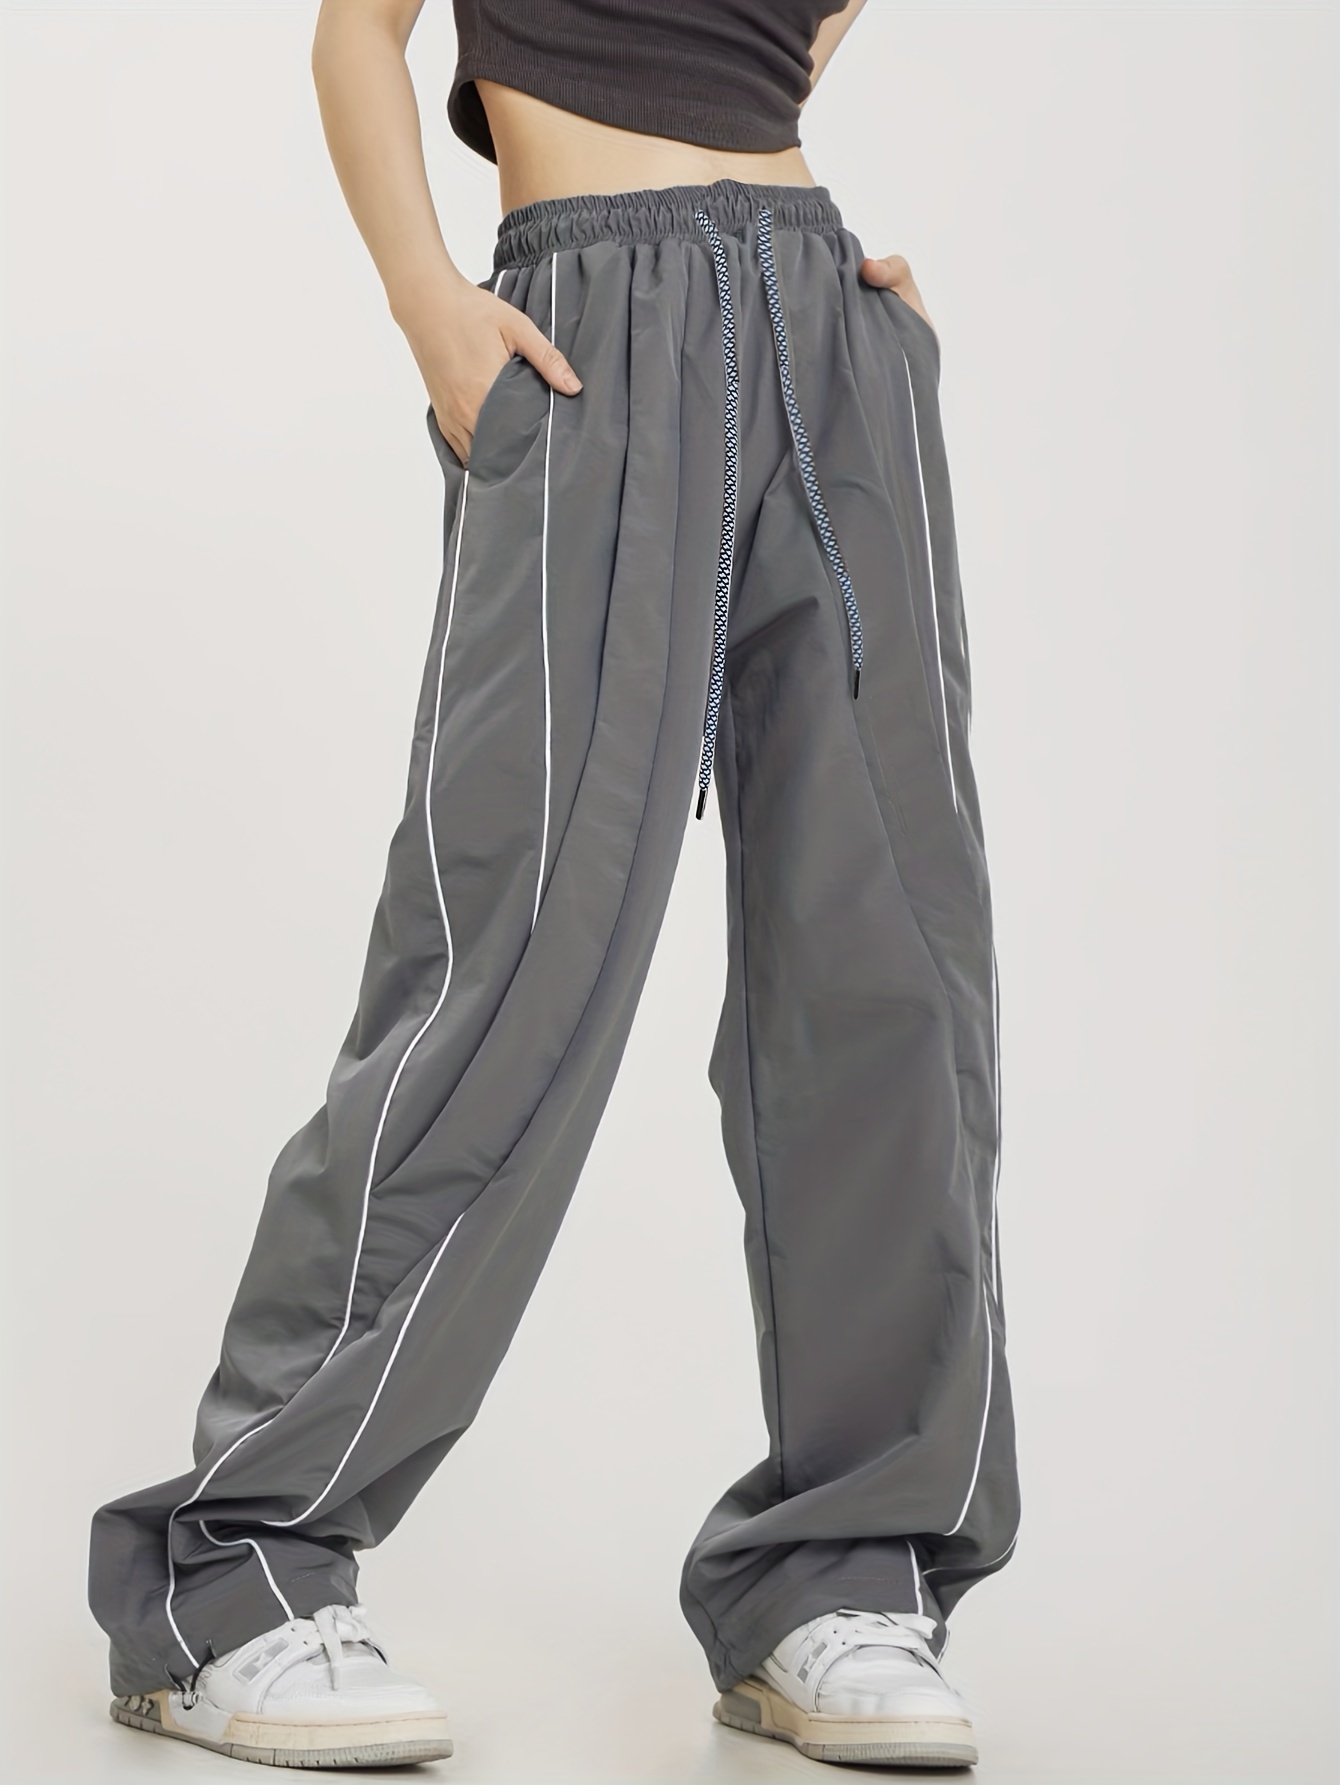 ZARKL Women's Pants High-Rise Slant Pocket Tapered Pants Pant for